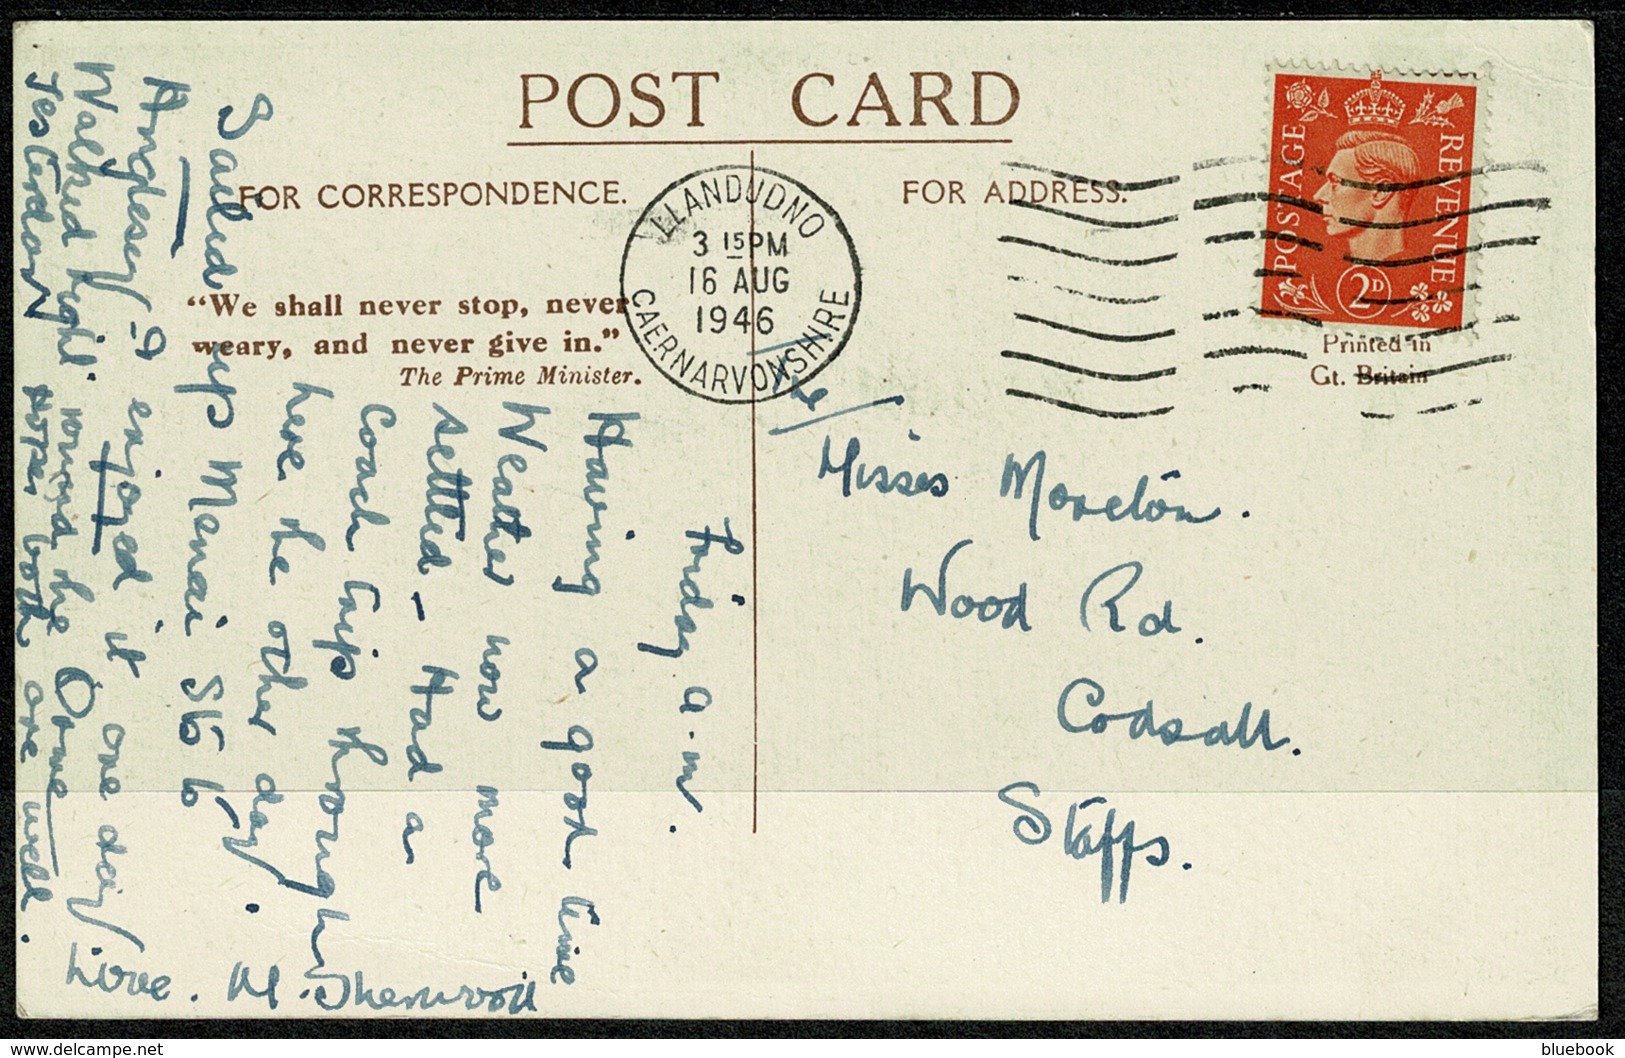 Ref 1276 - 1946 Postcard - Nant Ffrancon - Llandudno Postmark Caernarvonshire Wales - WWII Patriotic Message - Caernarvonshire